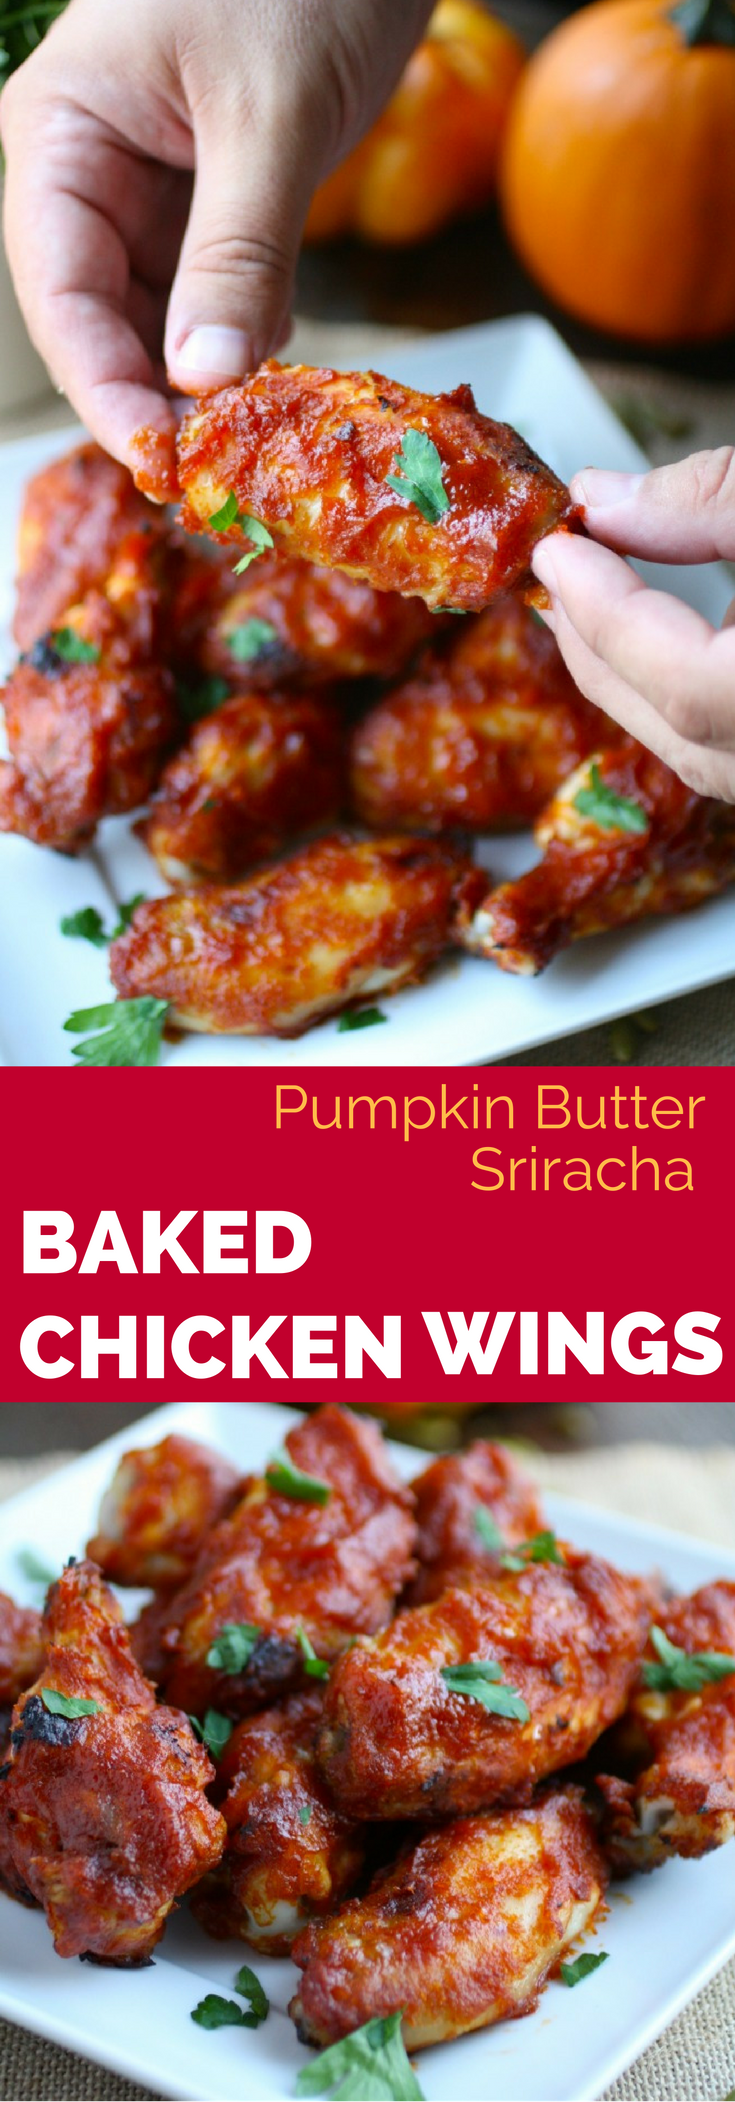 Enjoy these flavorful Pumpkin Butter Sriracha Baked Chicken Wings!